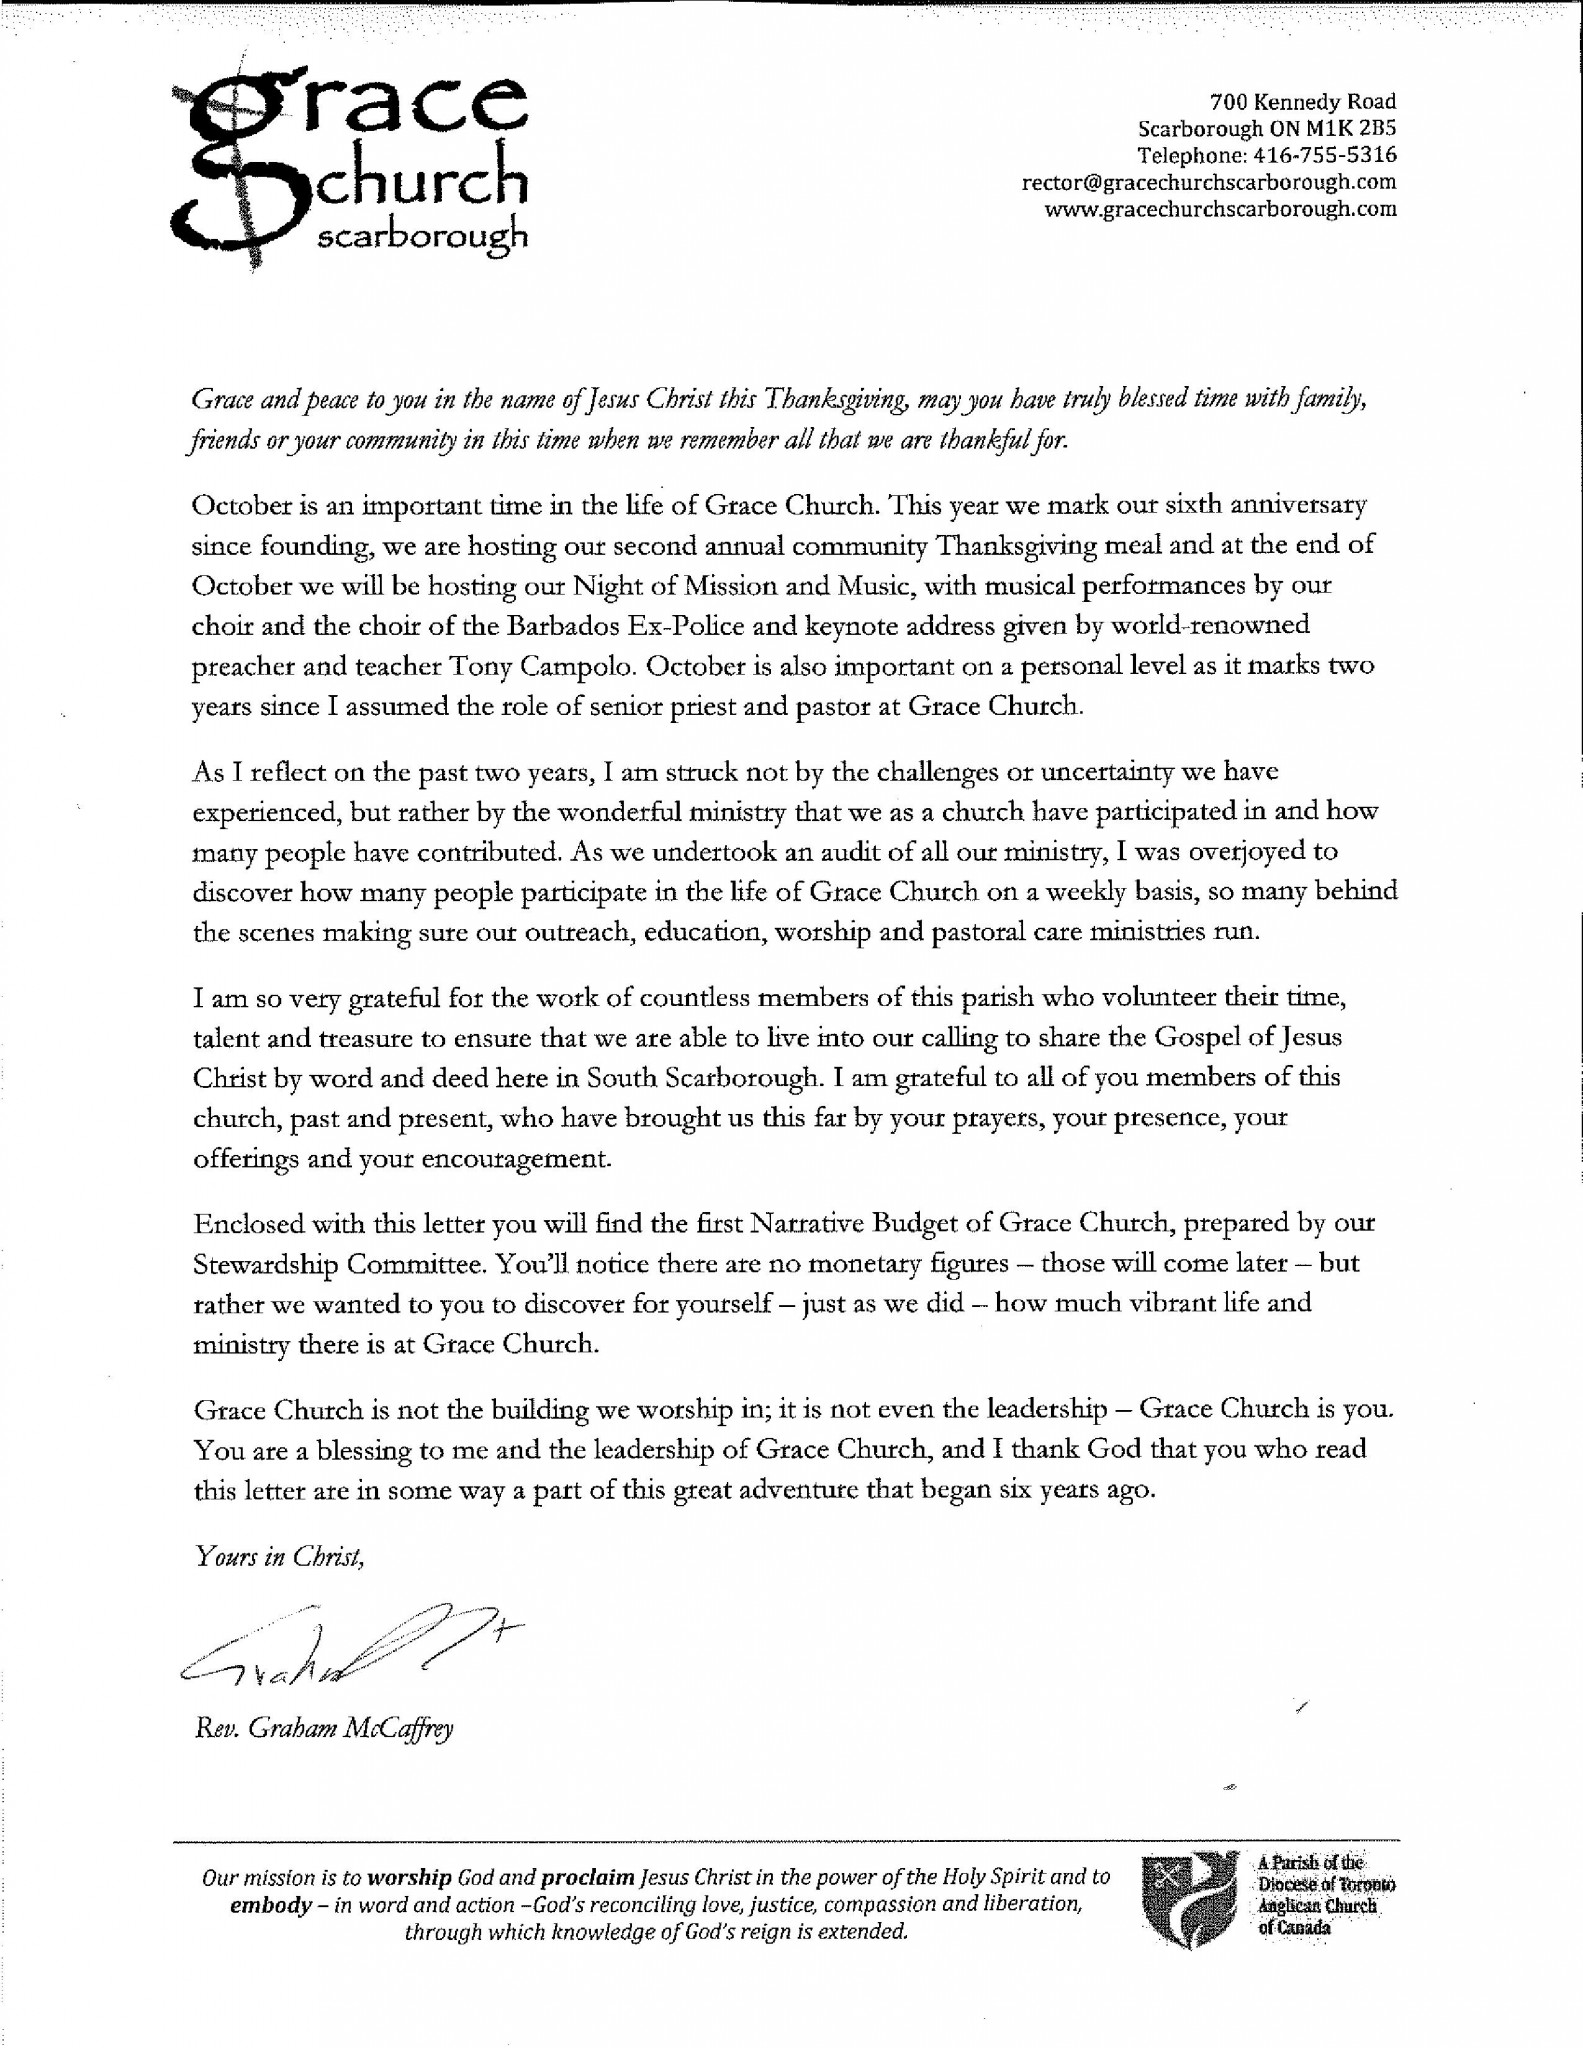 Thanksgiving Letter 2017 - Grace Church, Scarborough